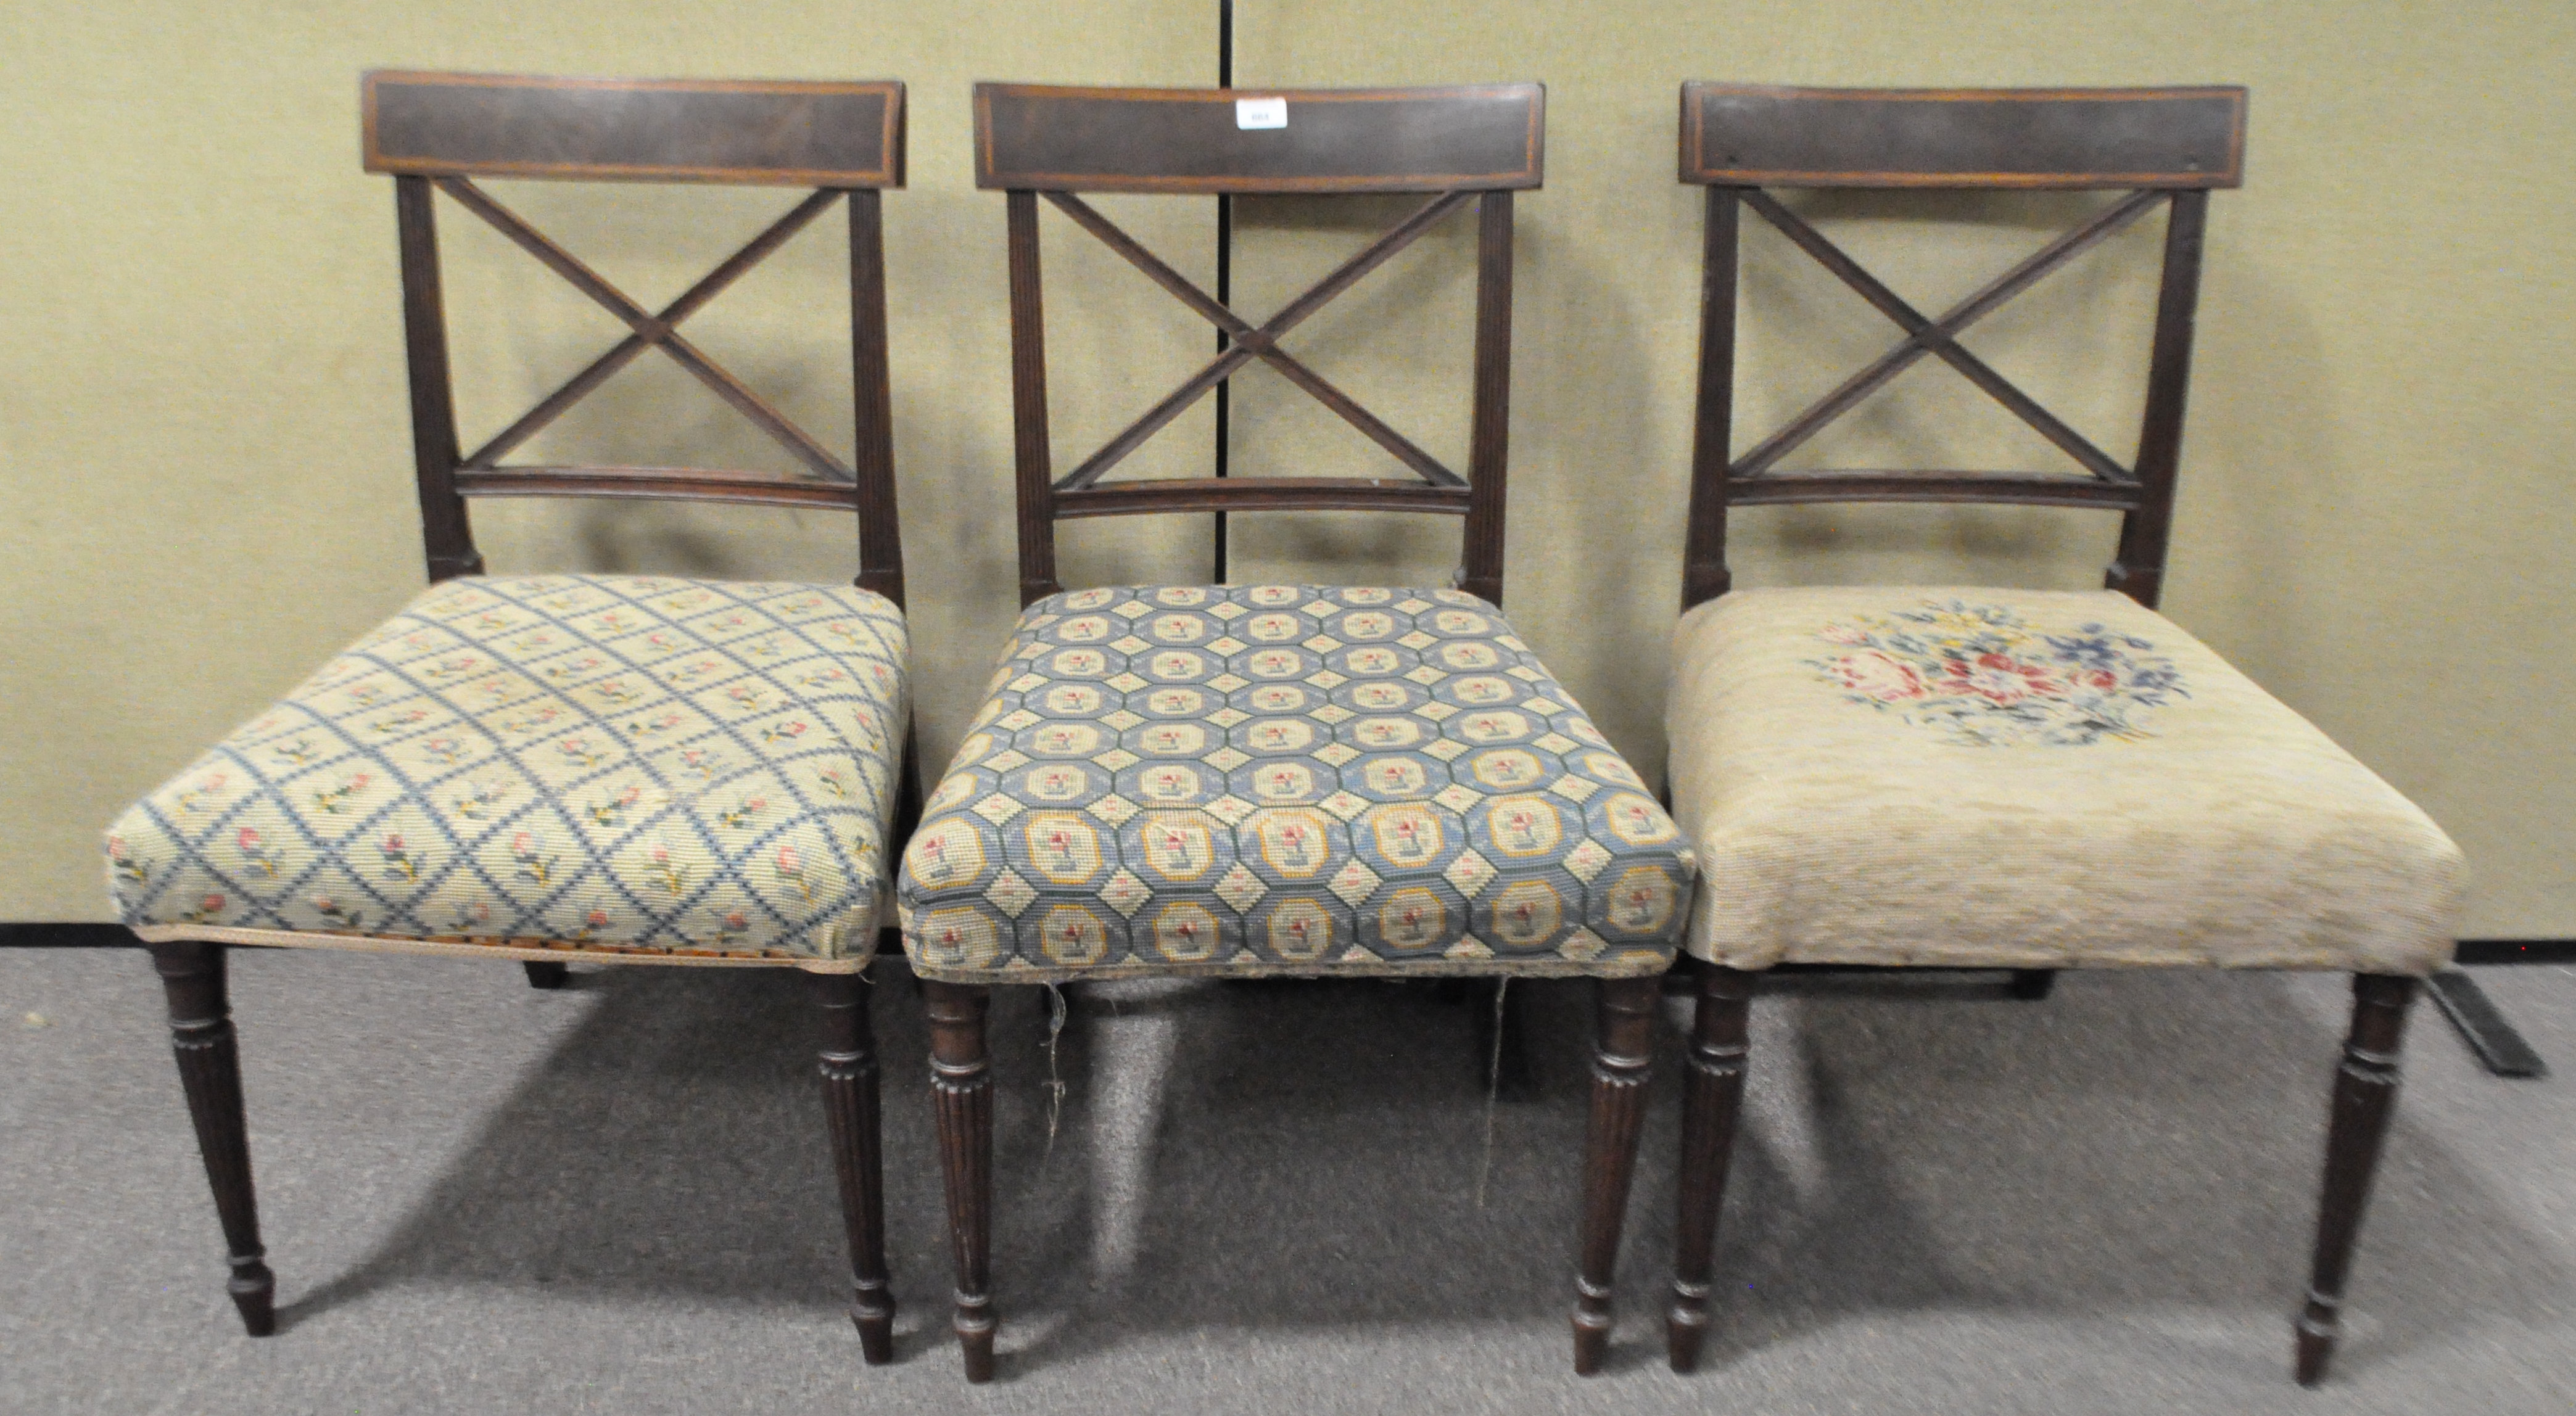 Three 19th century dining chairs